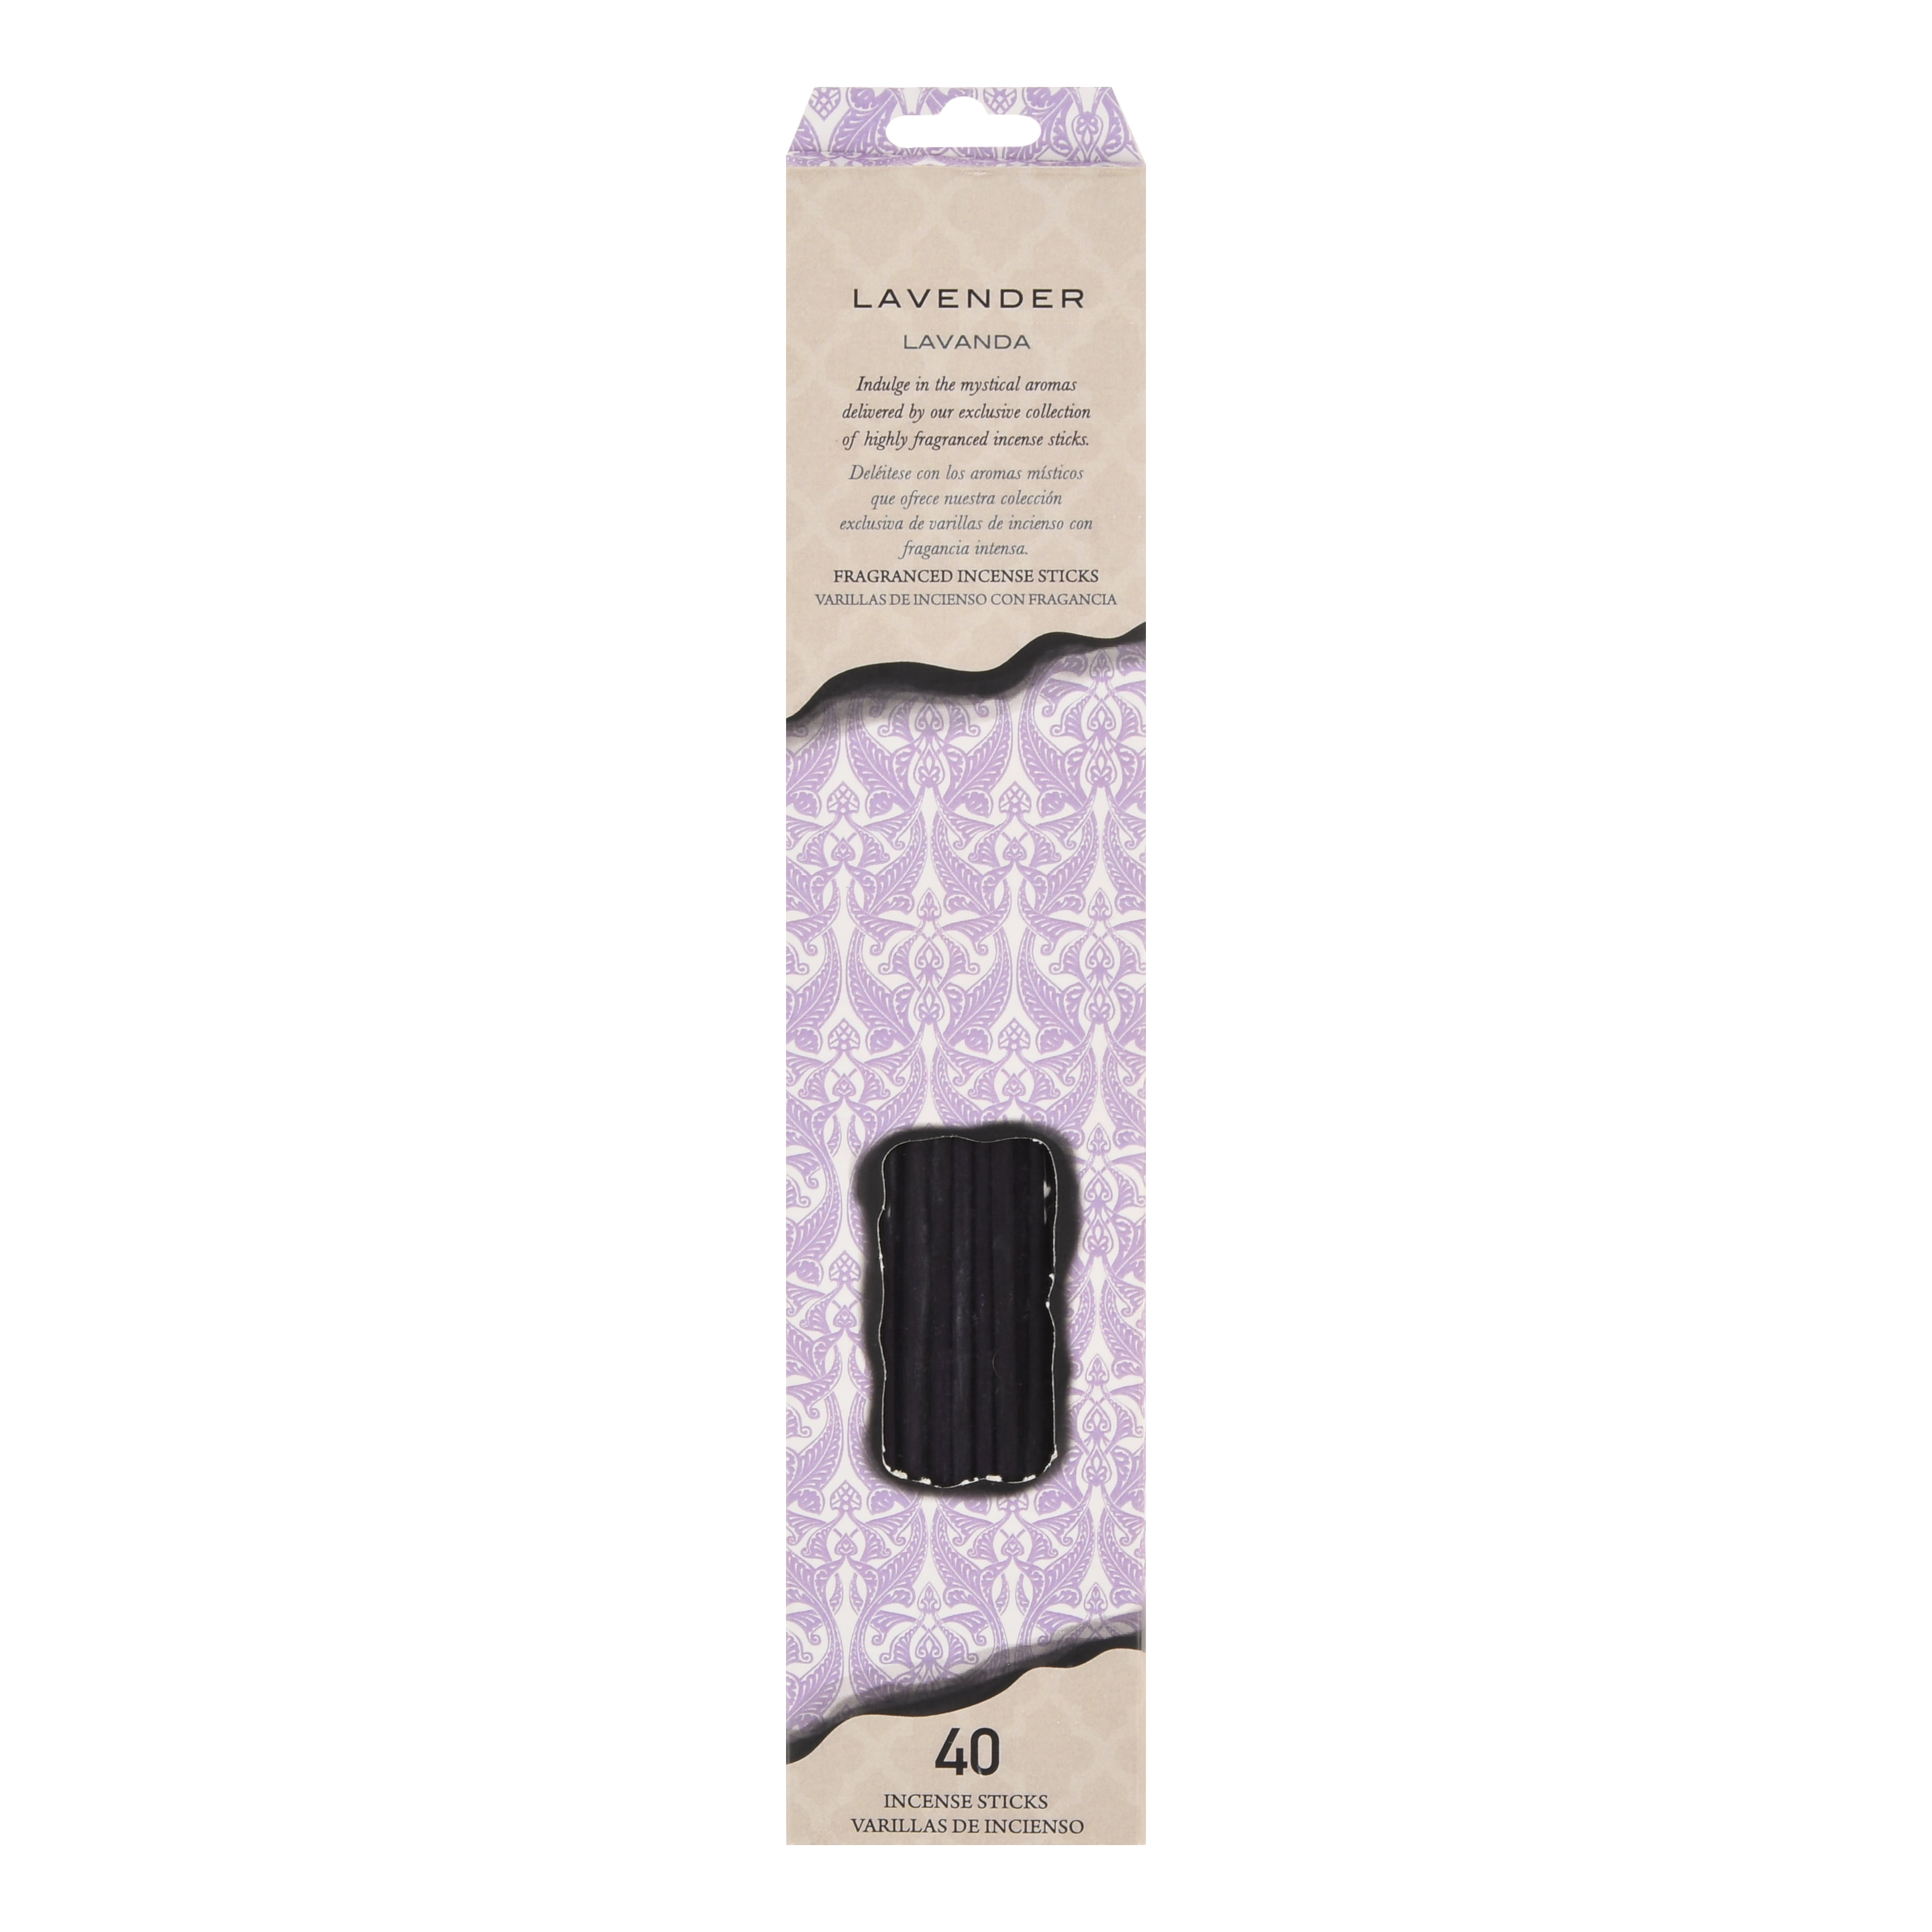 Details about   Lemon Charm Organic Lavender Handrolled Natural & Aromatherapy Incense Sticks 